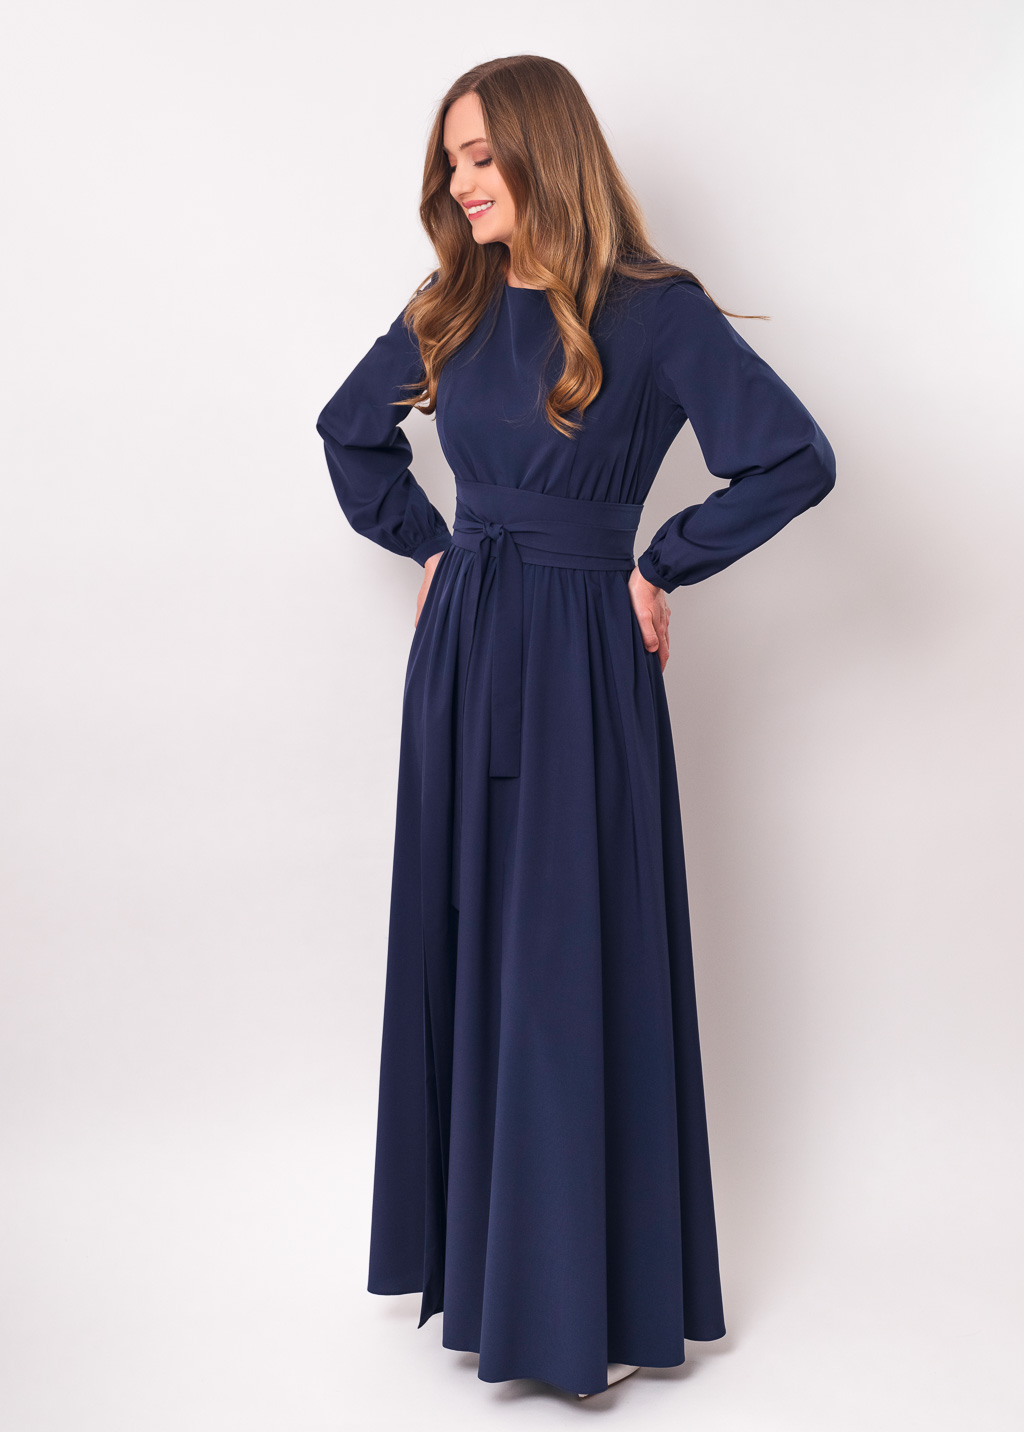 Navy blue long dress with belt